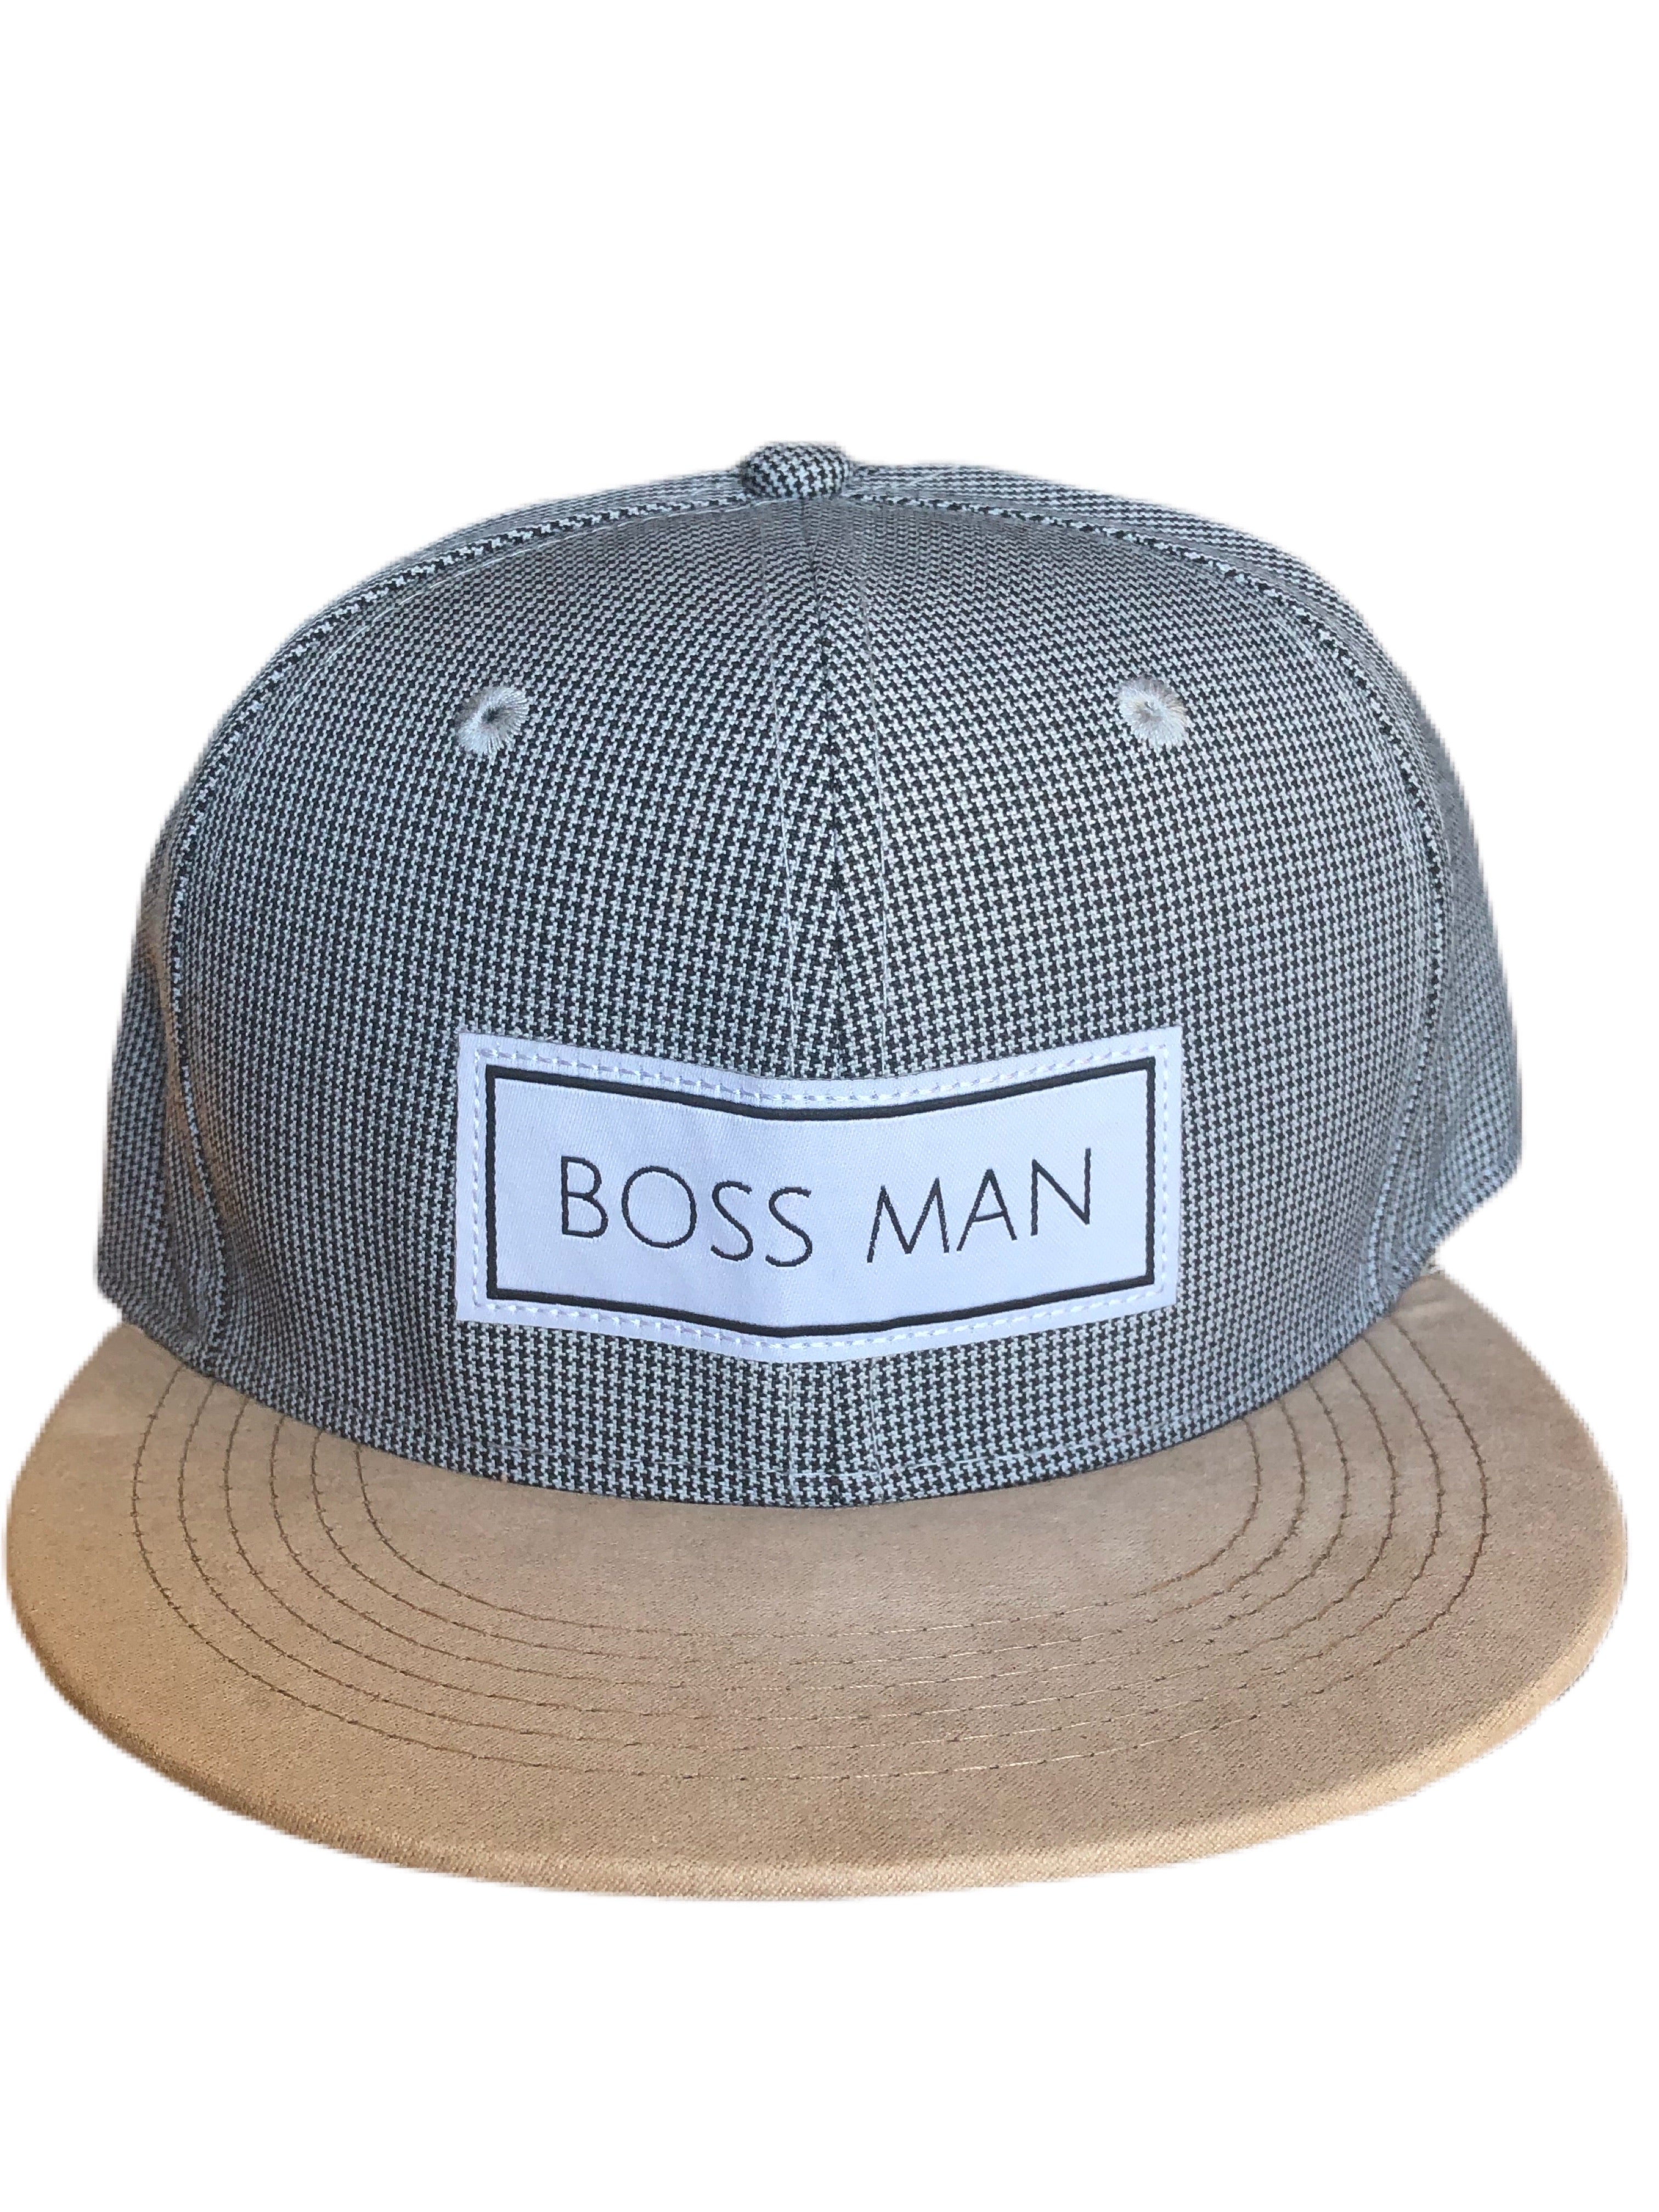 Suede Brim Boss Man Snapback Hat